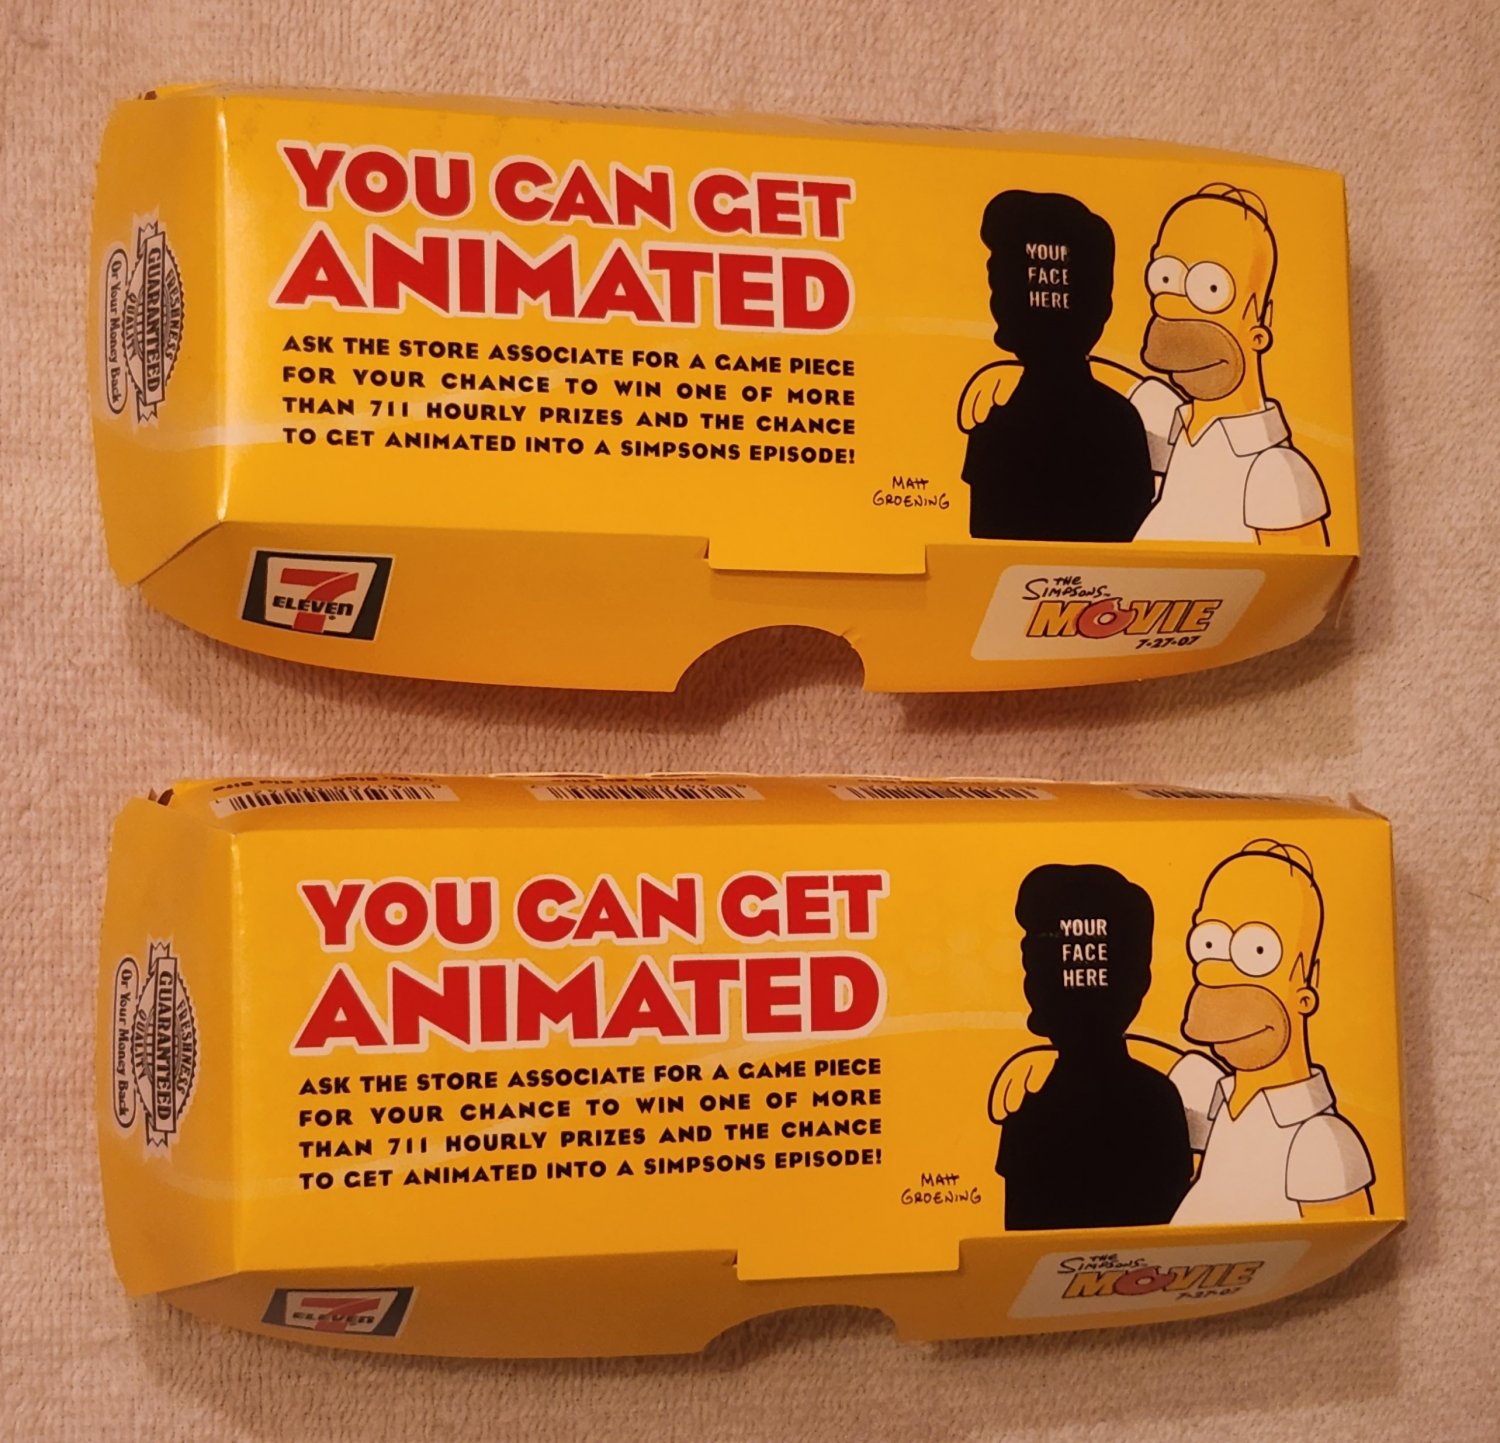 Simpsons Movie Cardboard Oscar Mayer Big Bite Hot Dog Box x2 Pop-Tarts Stickers Seven Eleven 7-11